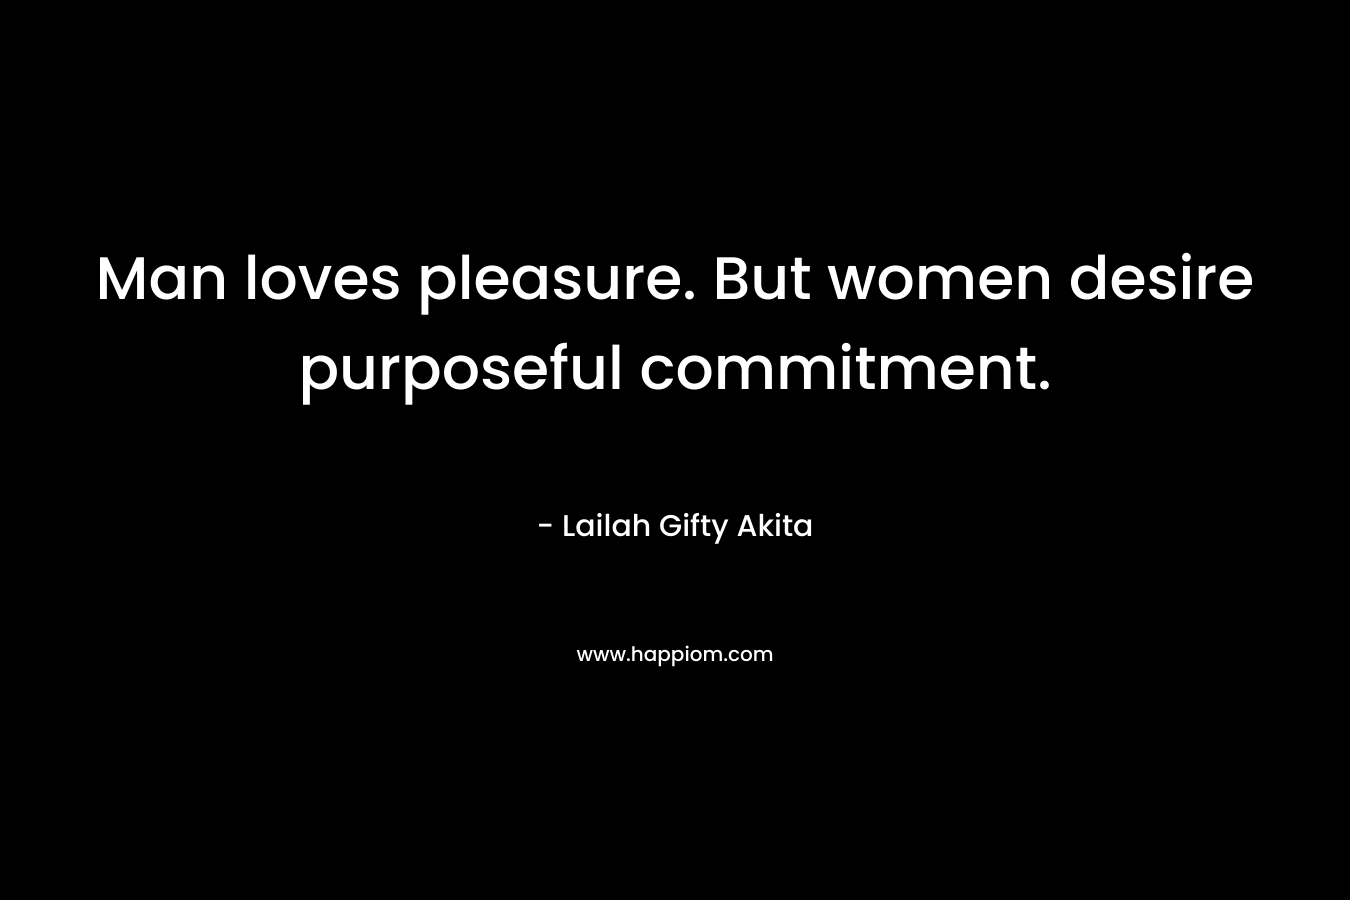 Man loves pleasure. But women desire purposeful commitment.